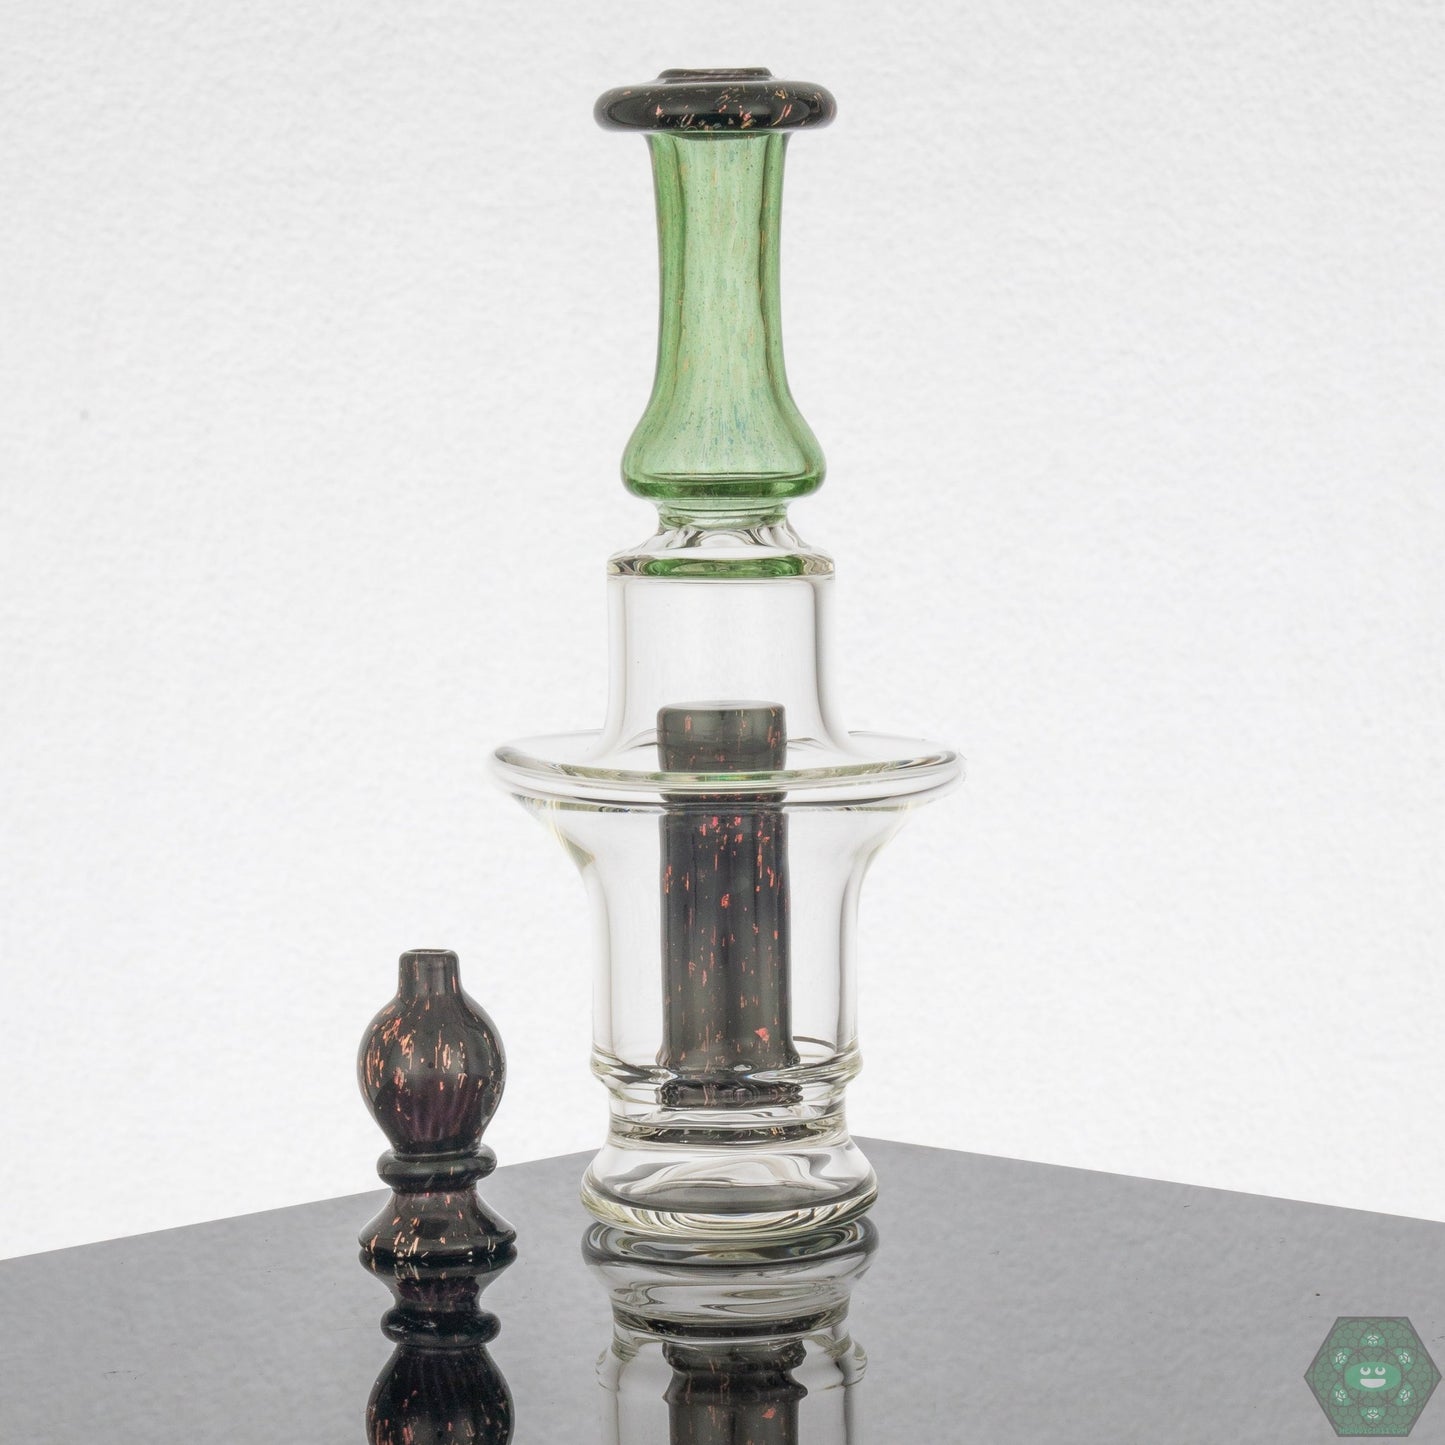 Melitz Art Glass Attachments - @Melitzartglass - HG